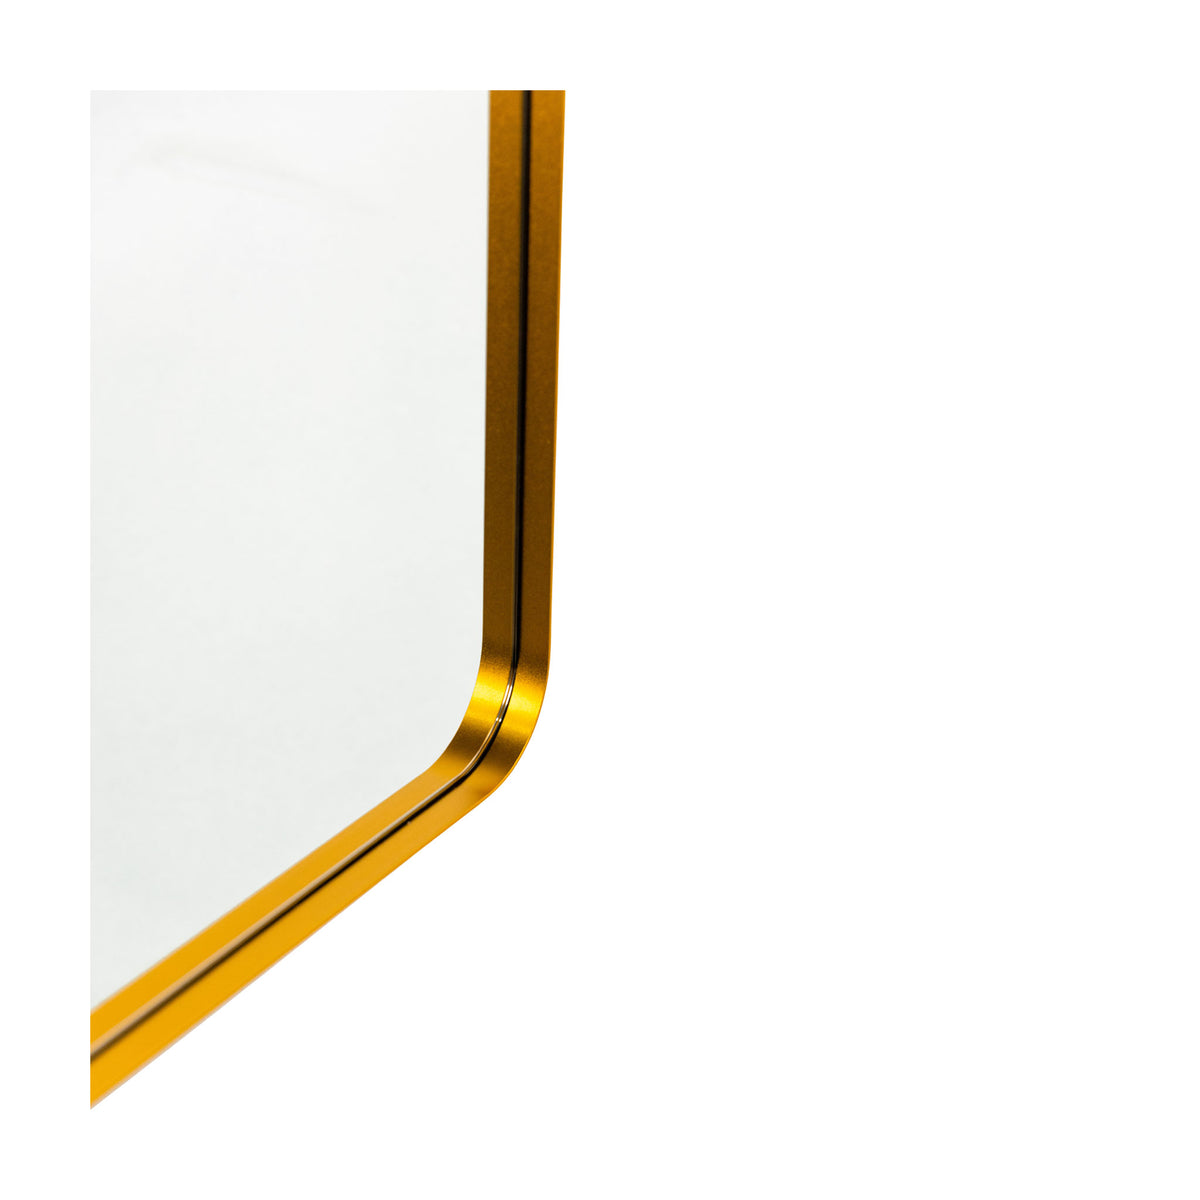 Sienna Radius Corners Gold Mirror - 500x750mm